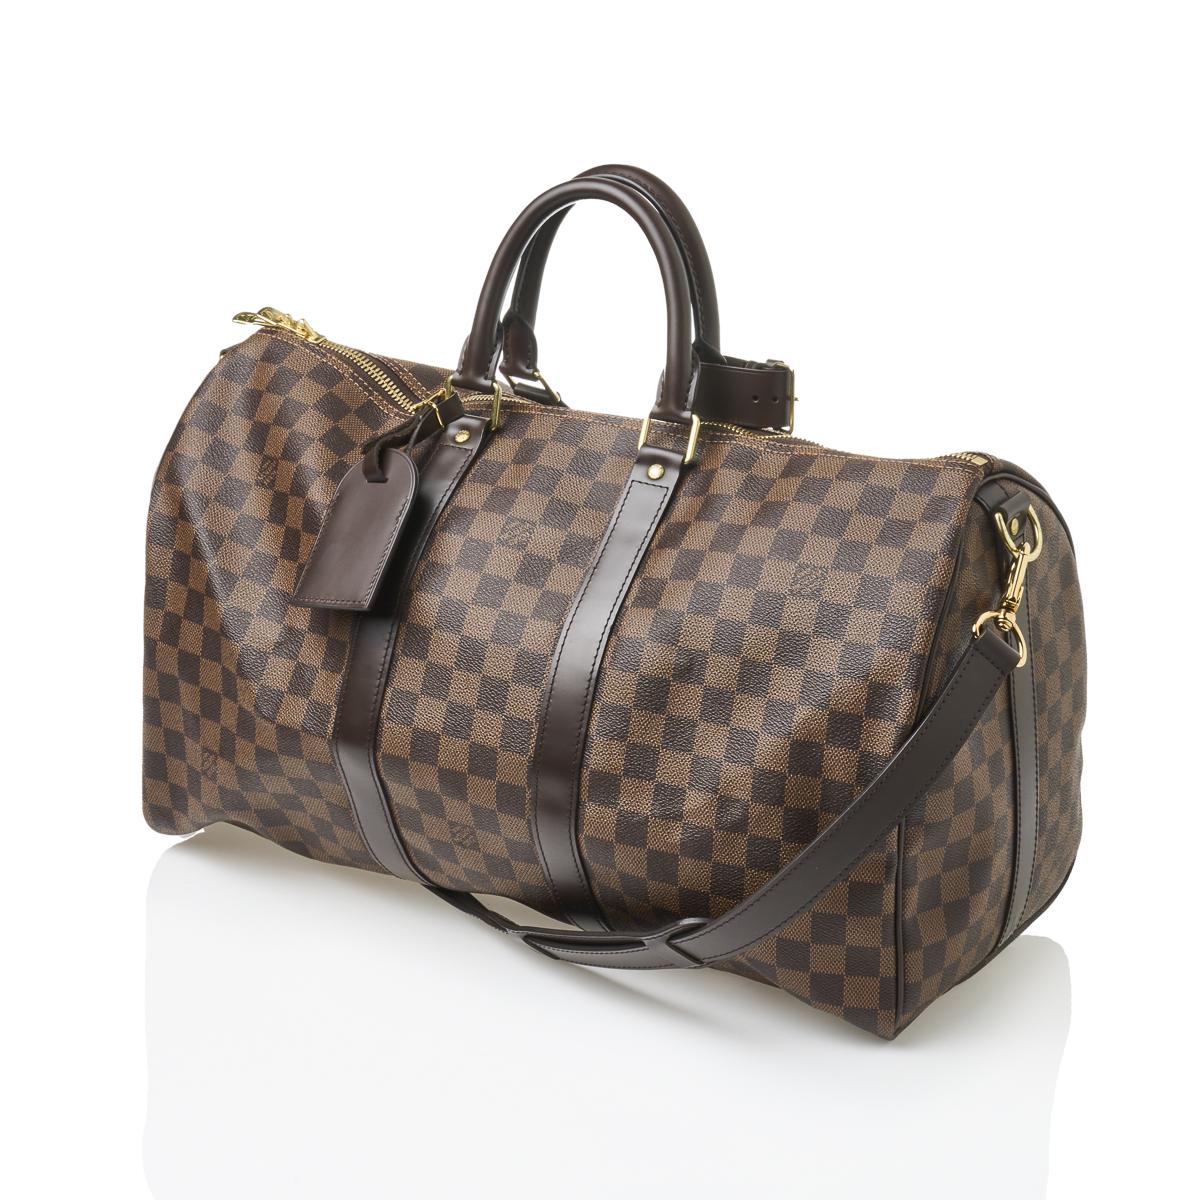 Lv damier travel bag 50 cm Luxury Bags  Wallets on Carousell